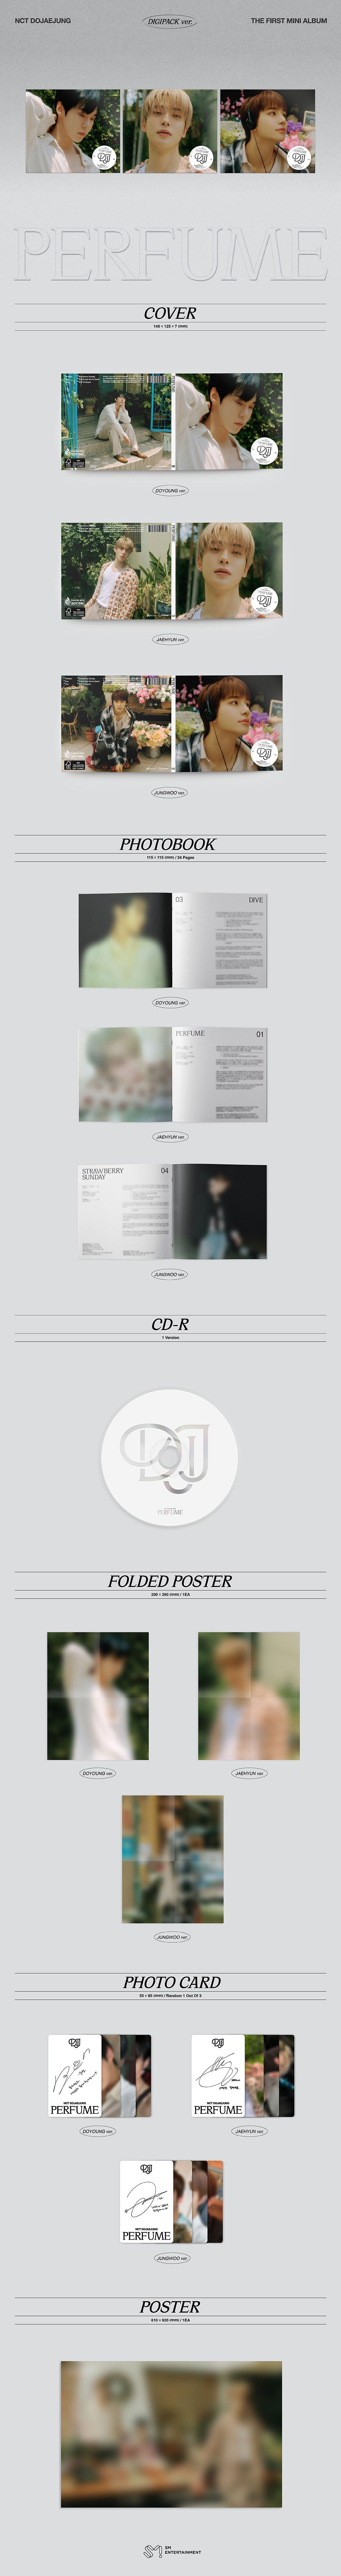 NCT (ドジェジョン) - Perfume (1st Mini Album) デジパック Ver.